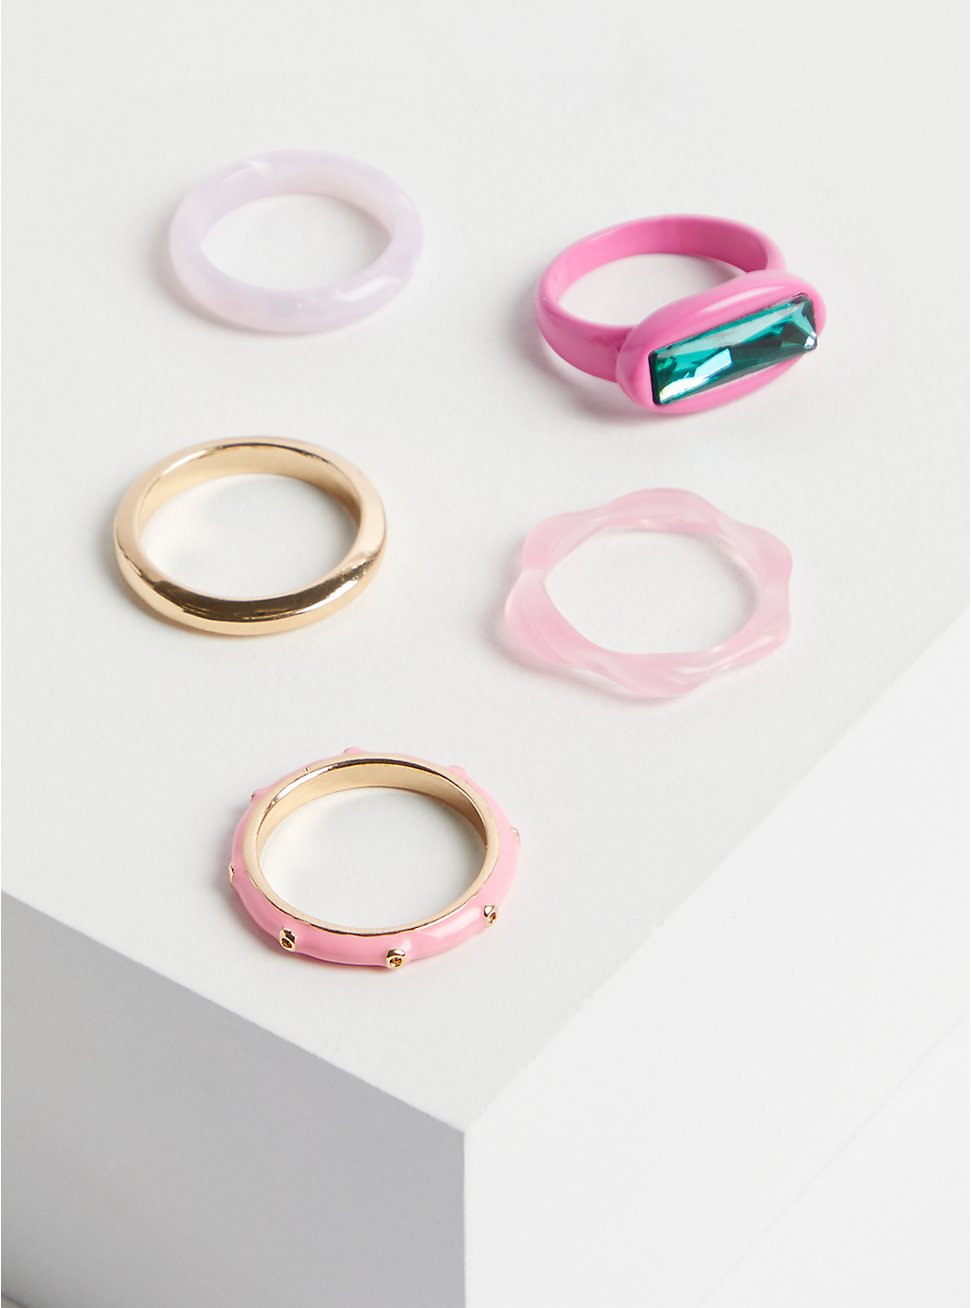 Resin and Enamel Ring Set of 5 - Gold Tone & Pink, PINK, hi-res